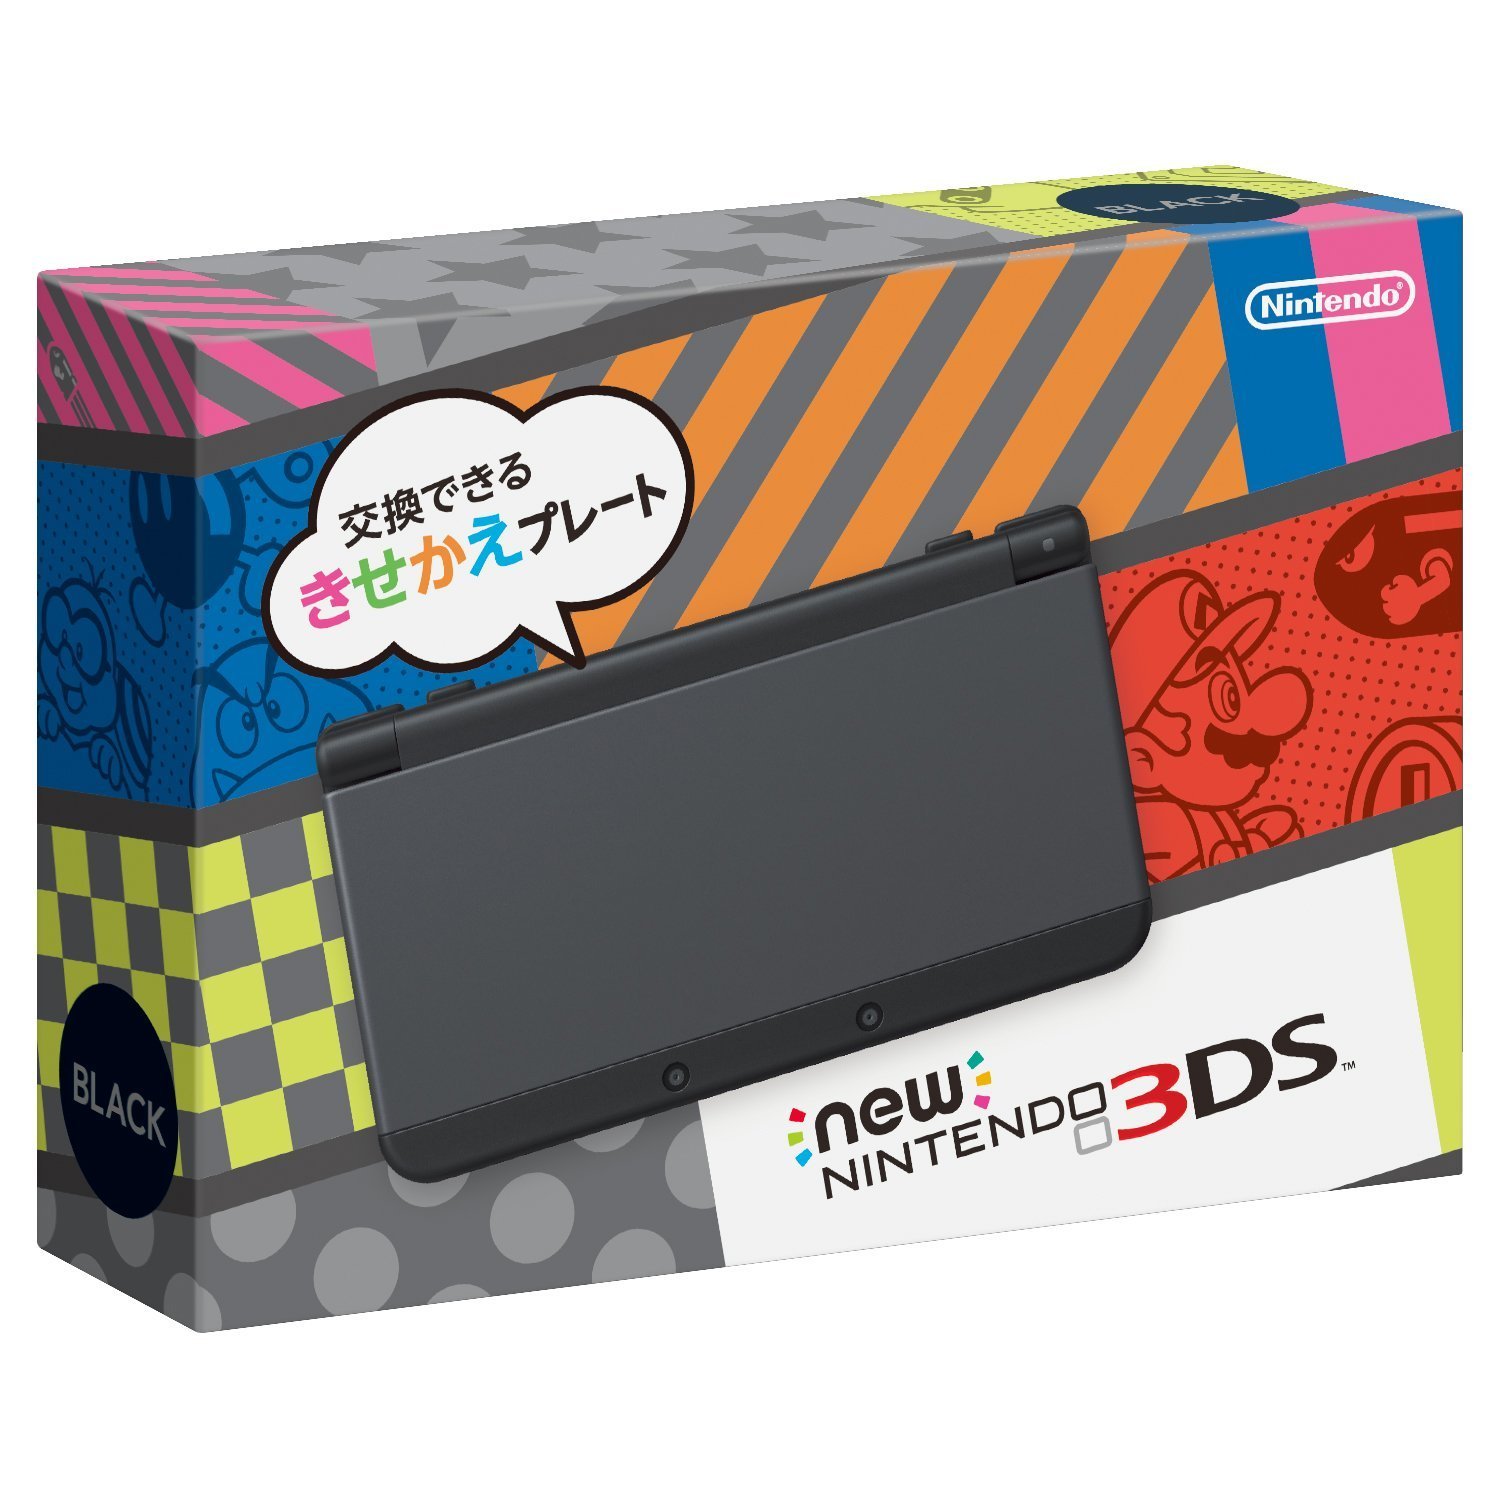 New Nintendo 3DS Black (Japan import - only for Japanese games)